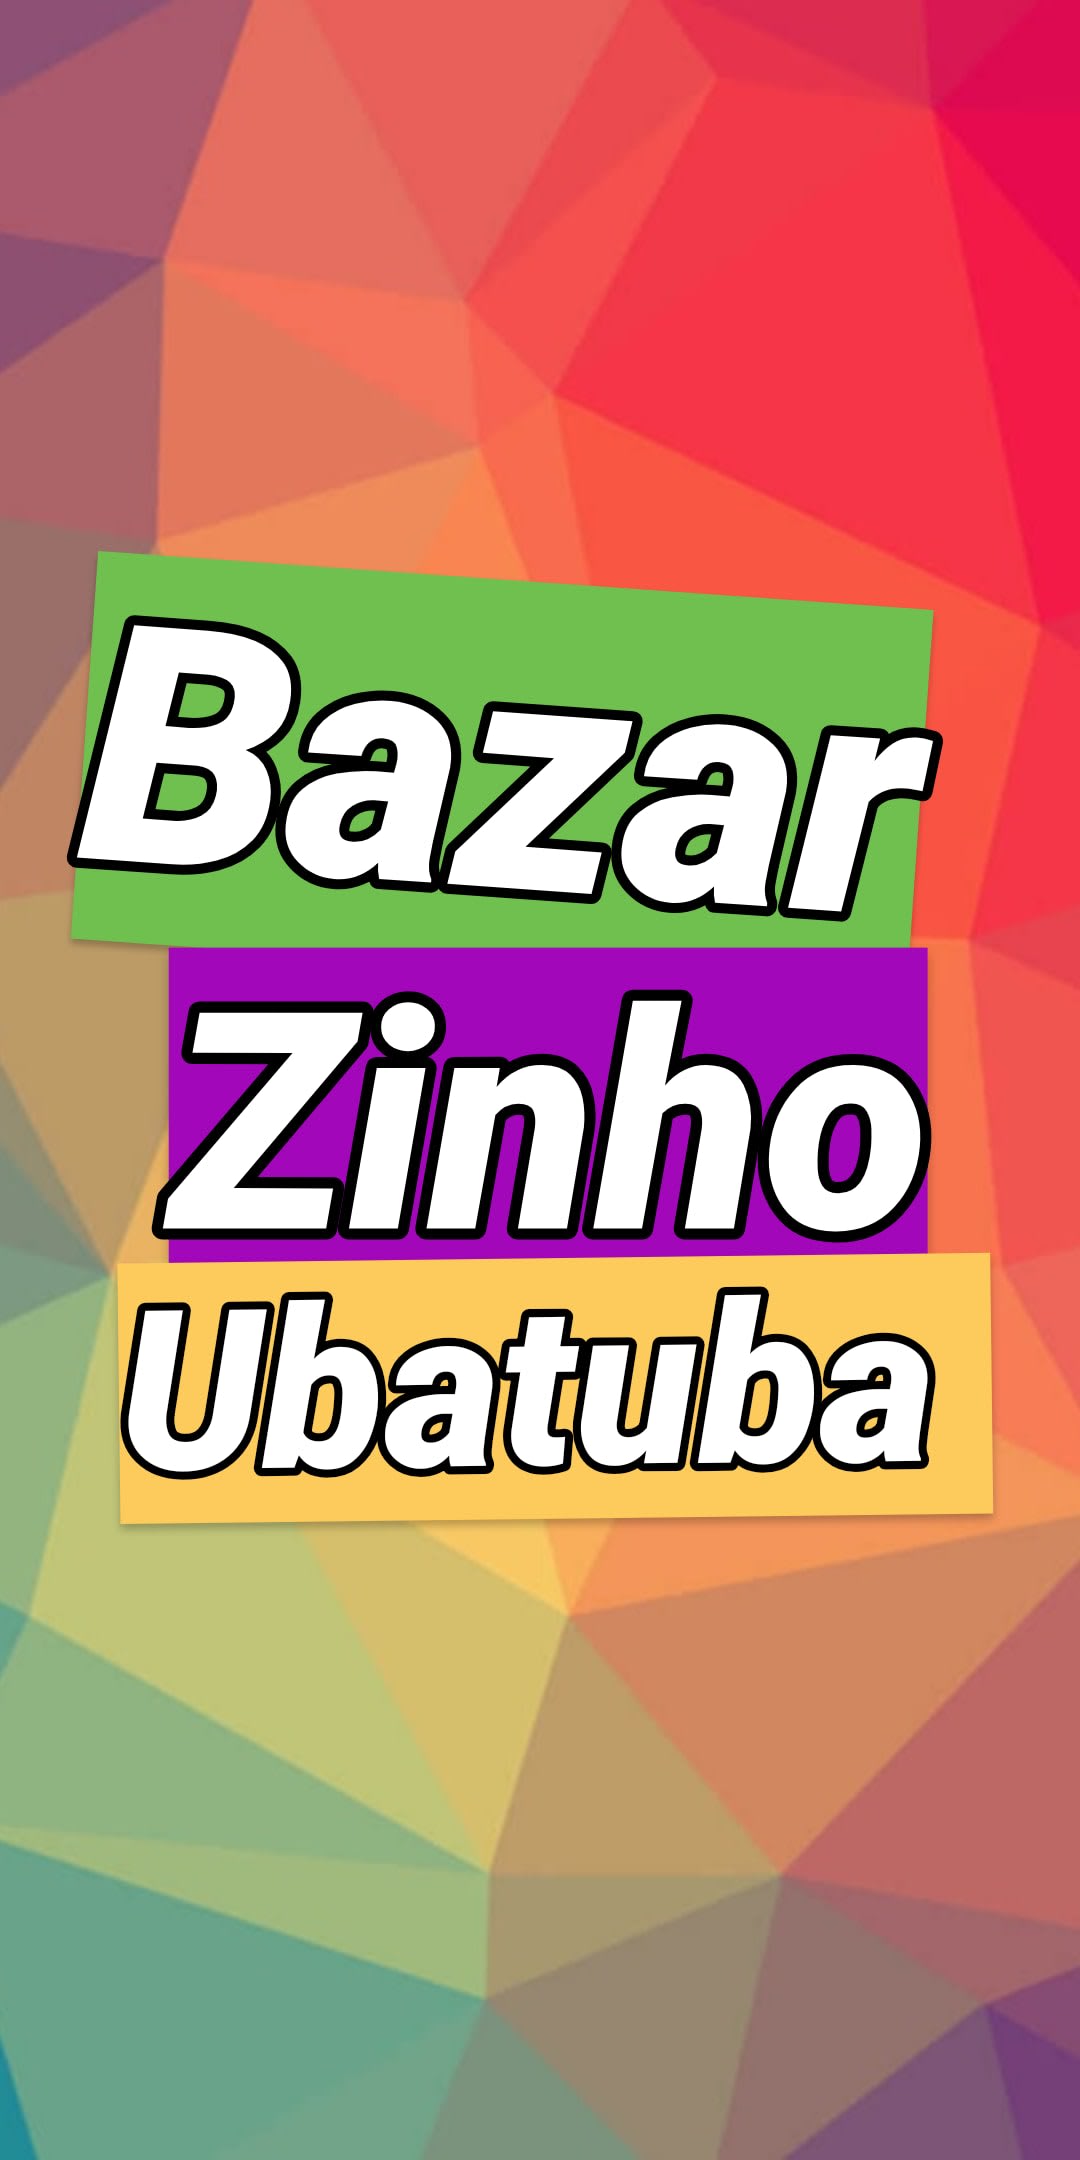 Bazarzinho Ubatuba